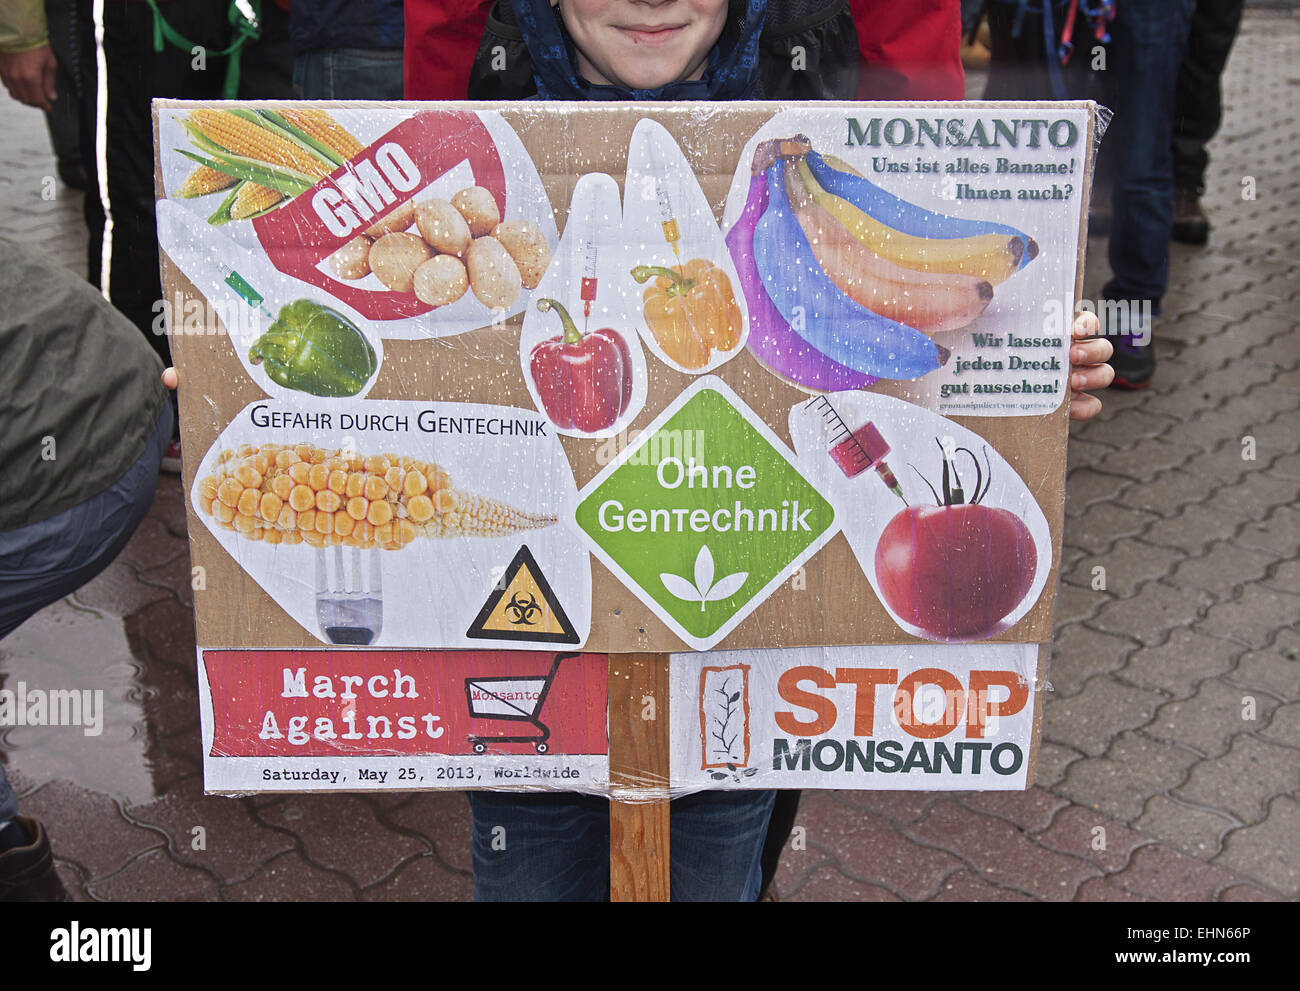 Monsanto Stock Photo